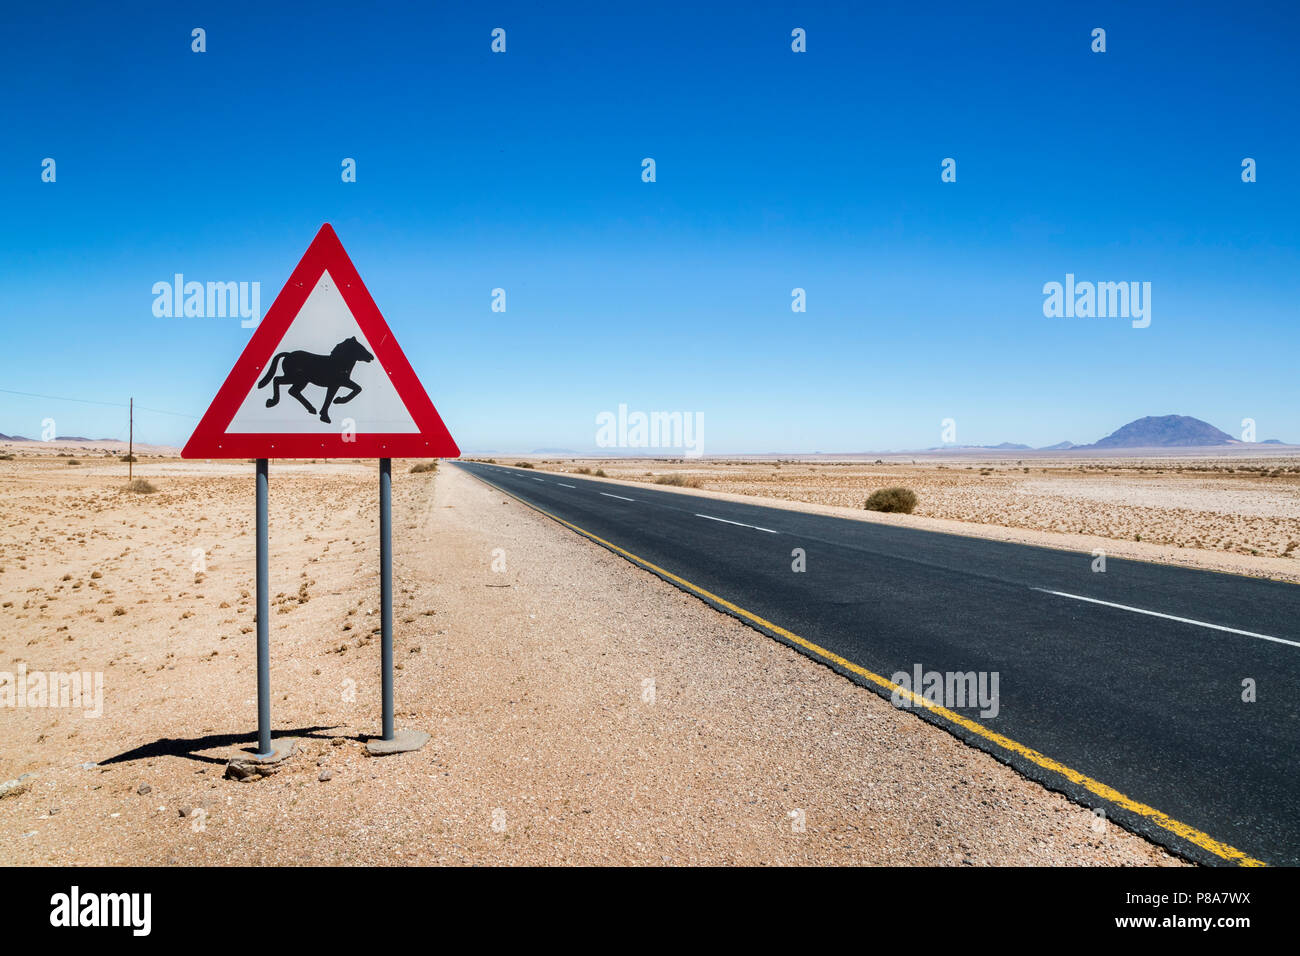 Road sign warning of wild horses, Namibia, Stock Photo